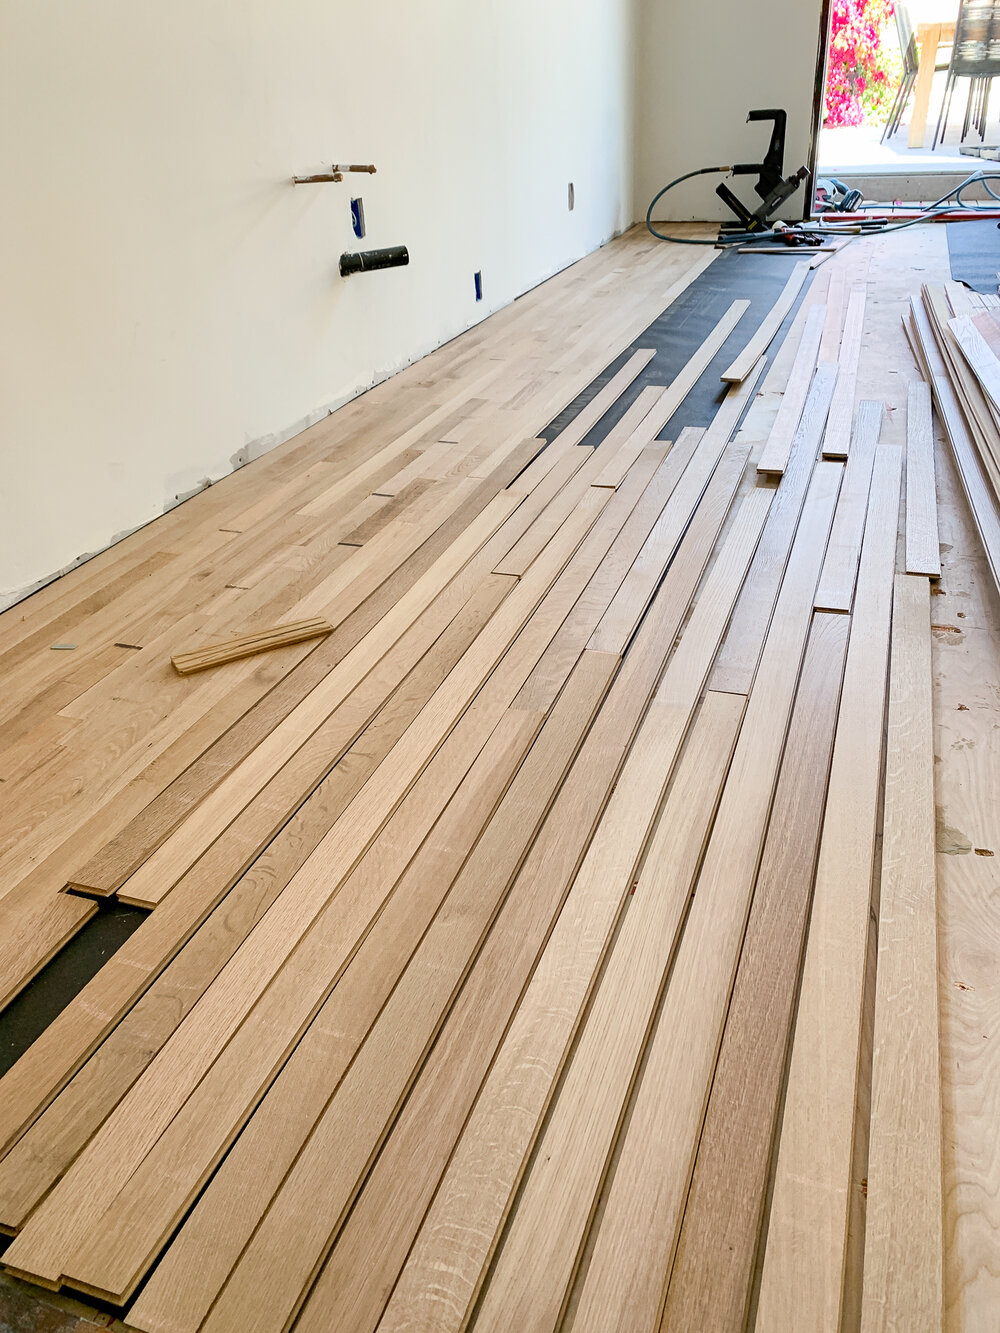 Installing New Hardwood Floors In Our, Whole House Hardwood Floor Installation